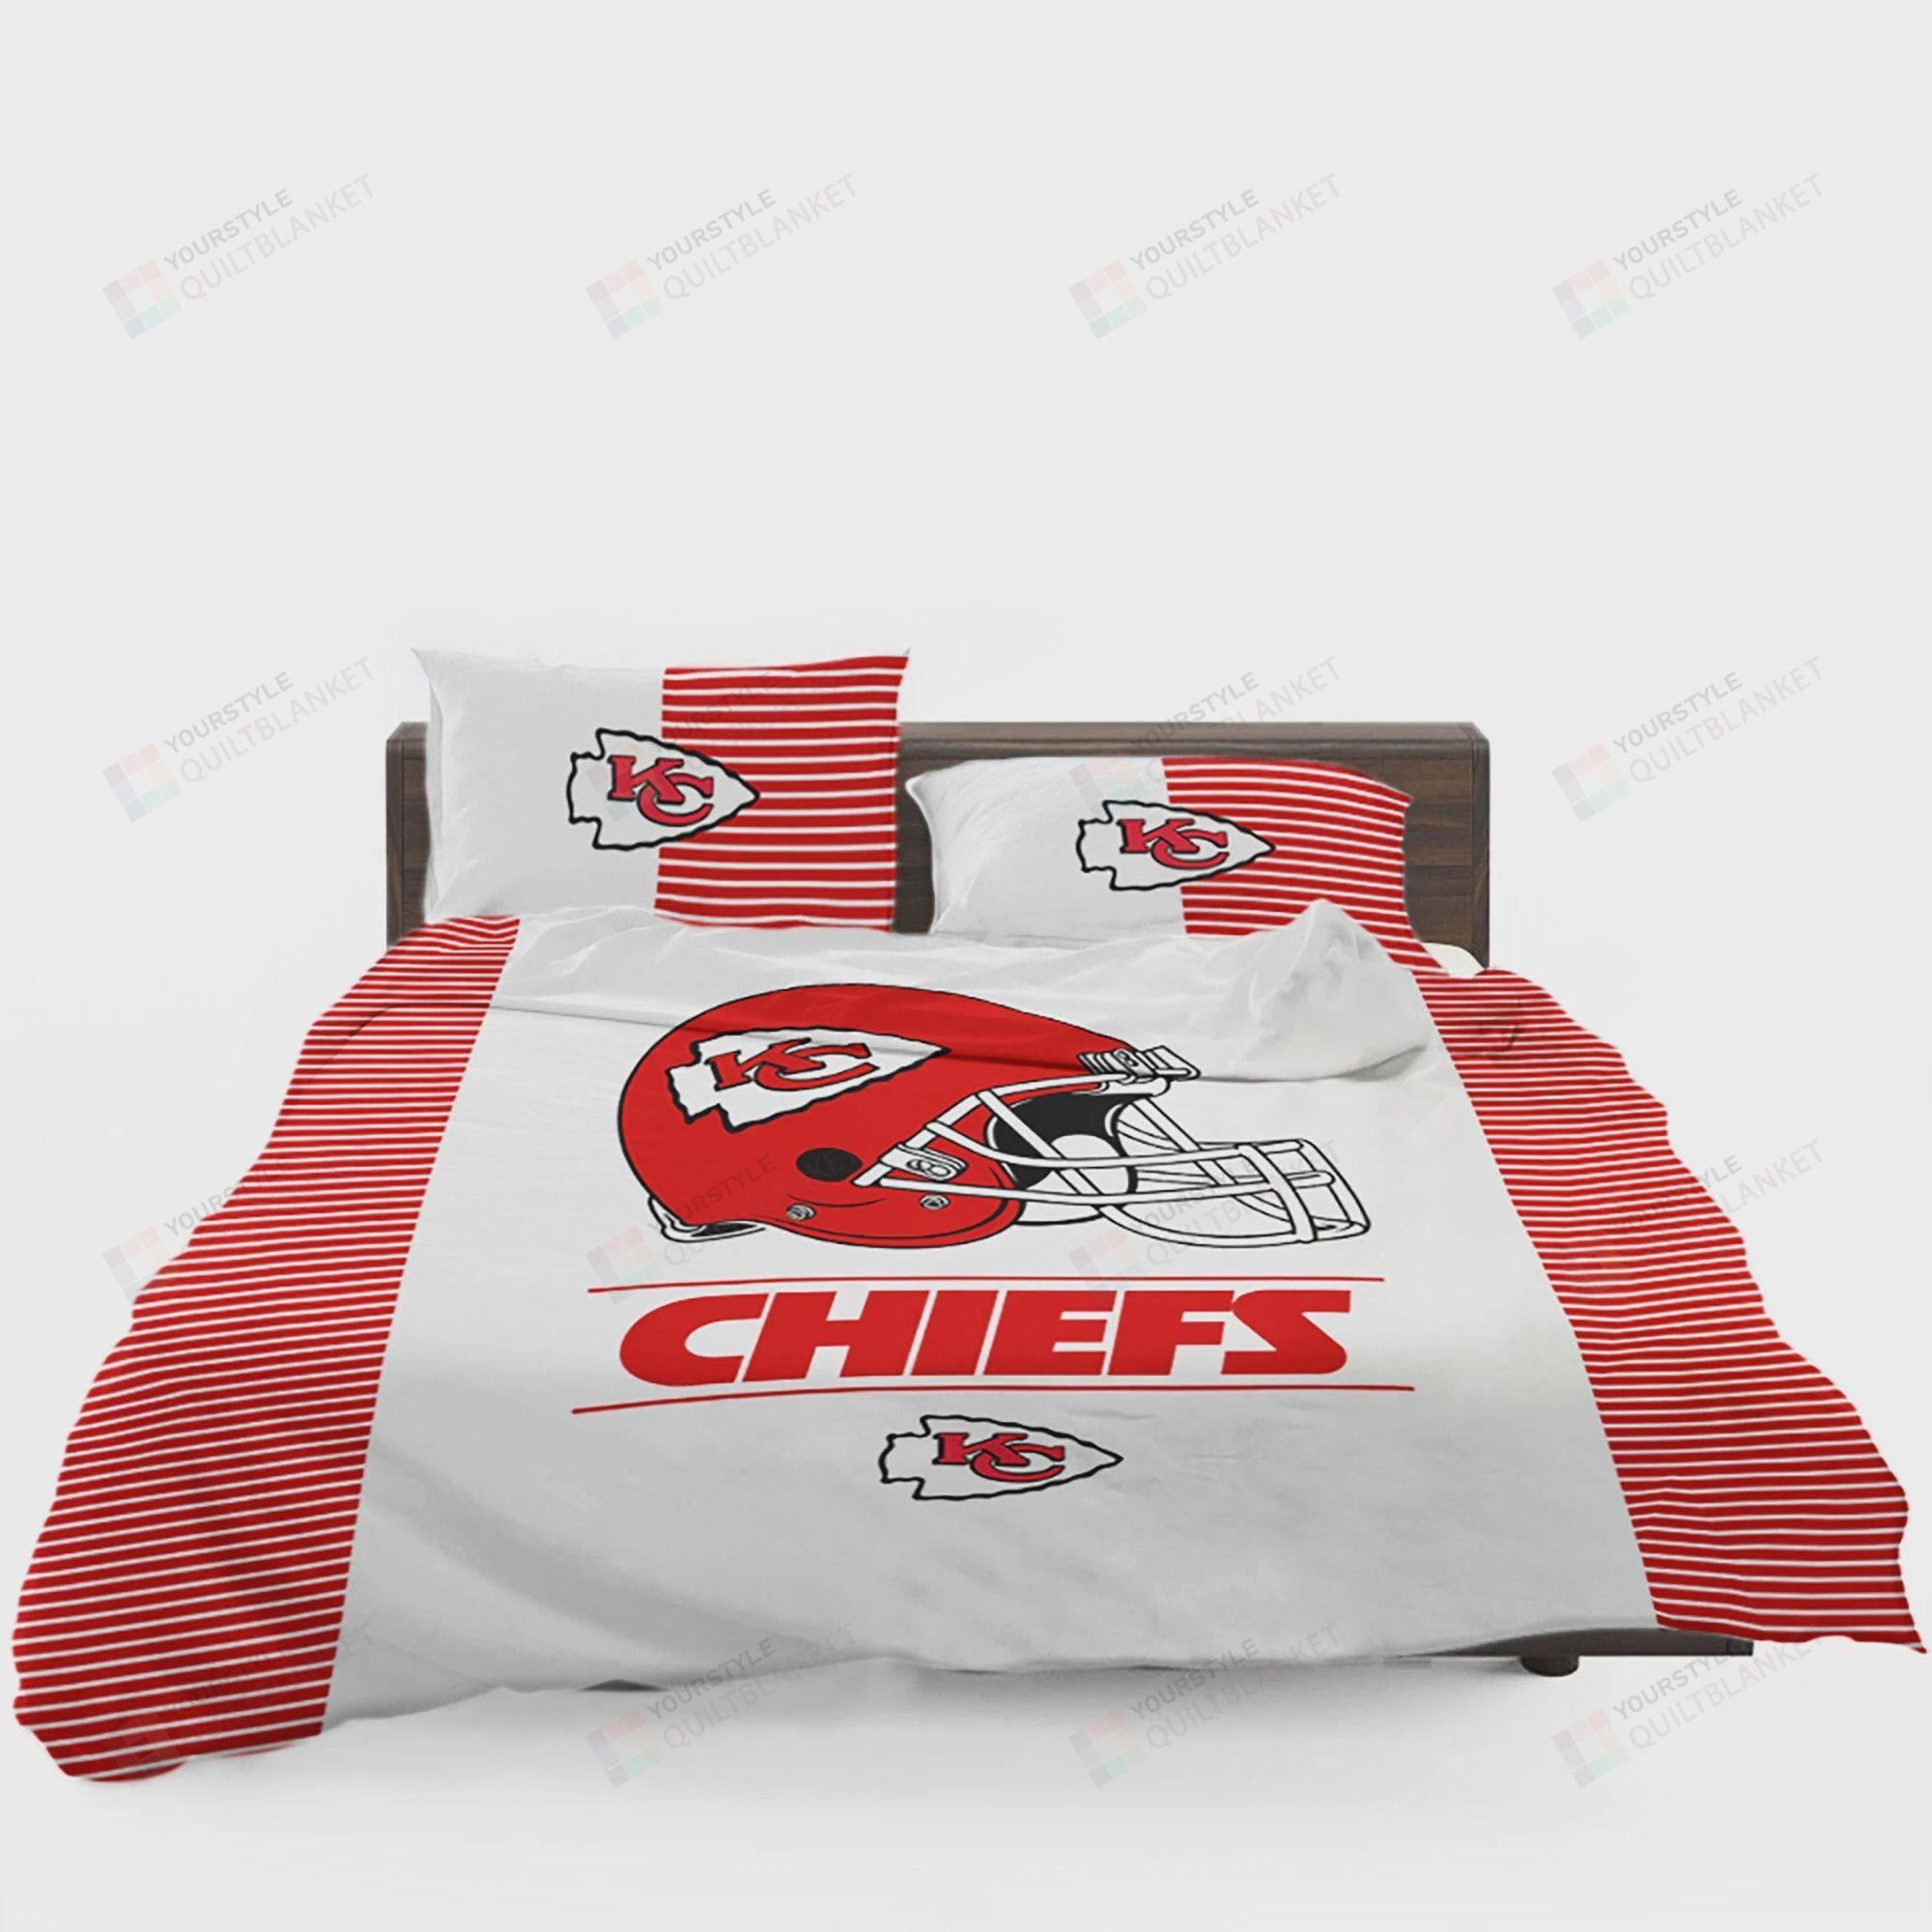 Kansas City Chiefs Duvet Cover Quilt Cover Pillowcase Bedding Set